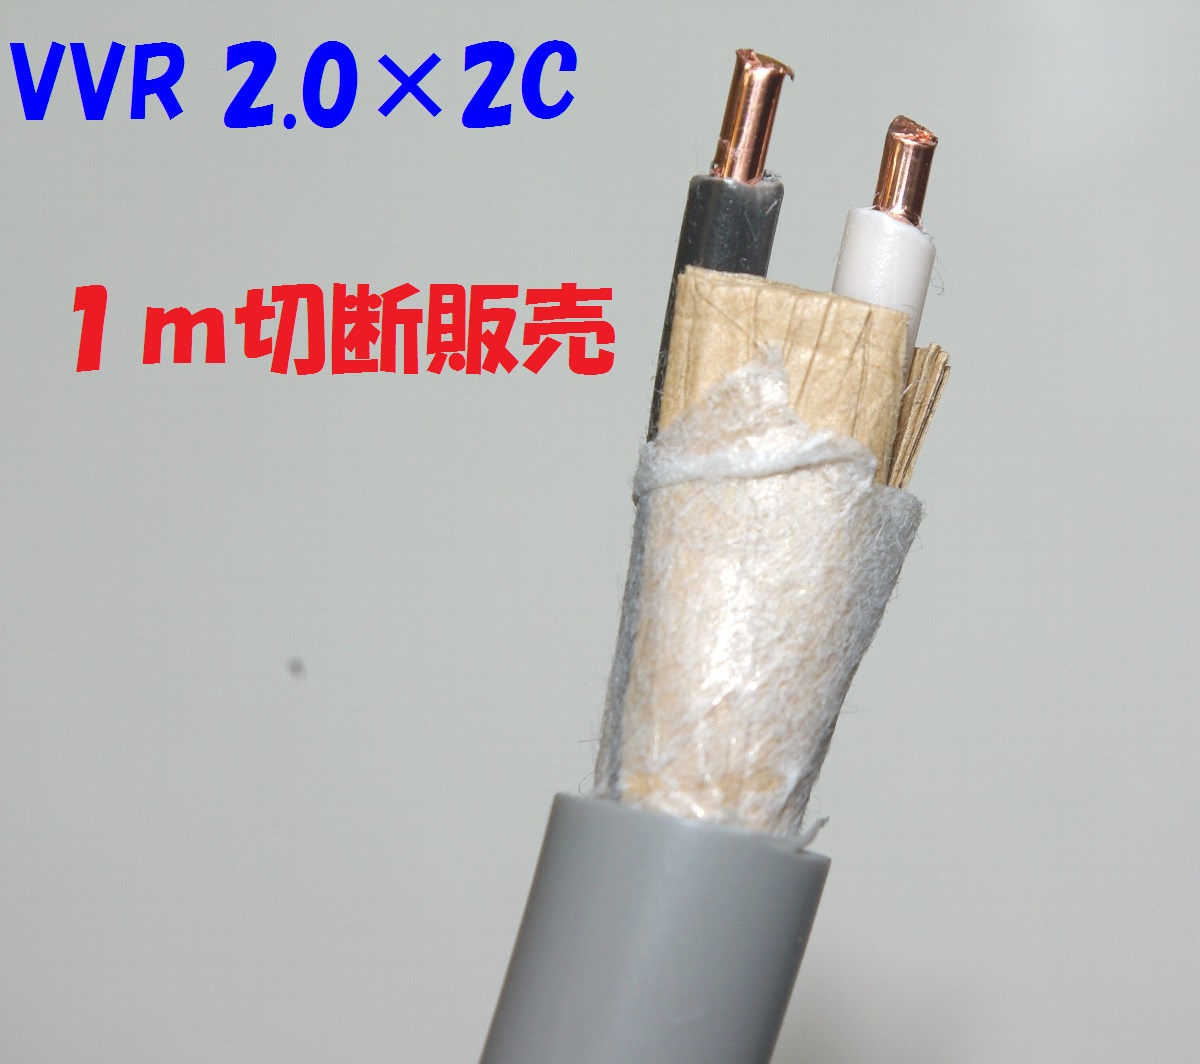 600V ビニル絶縁ビニルシース丸型絶縁電線 VVR 2.0mm×2c 1m 切断販売画像